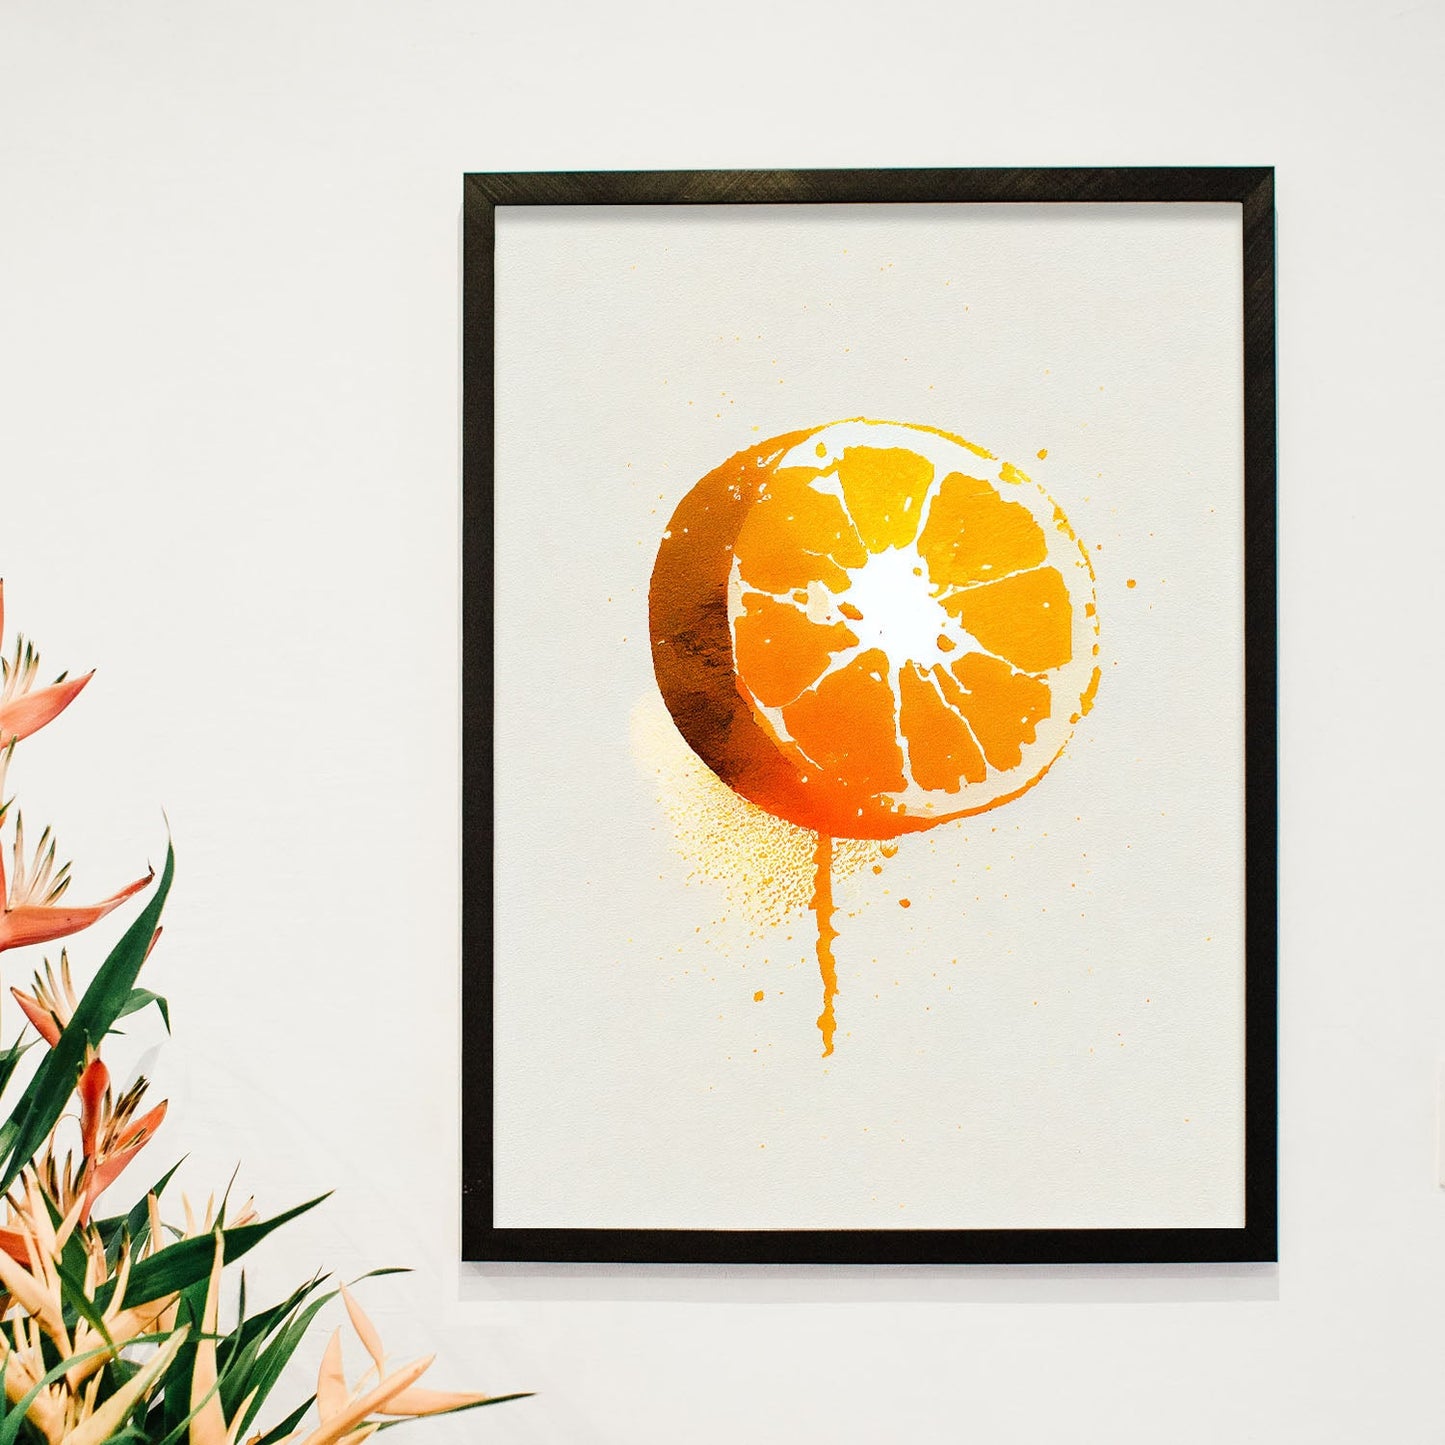 Nacnic minimalist Orange_2. Aesthetic Wall Art Prints for Bedroom or Living Room Design.-Artwork-Nacnic-A4-Sin Marco-Nacnic Estudio SL